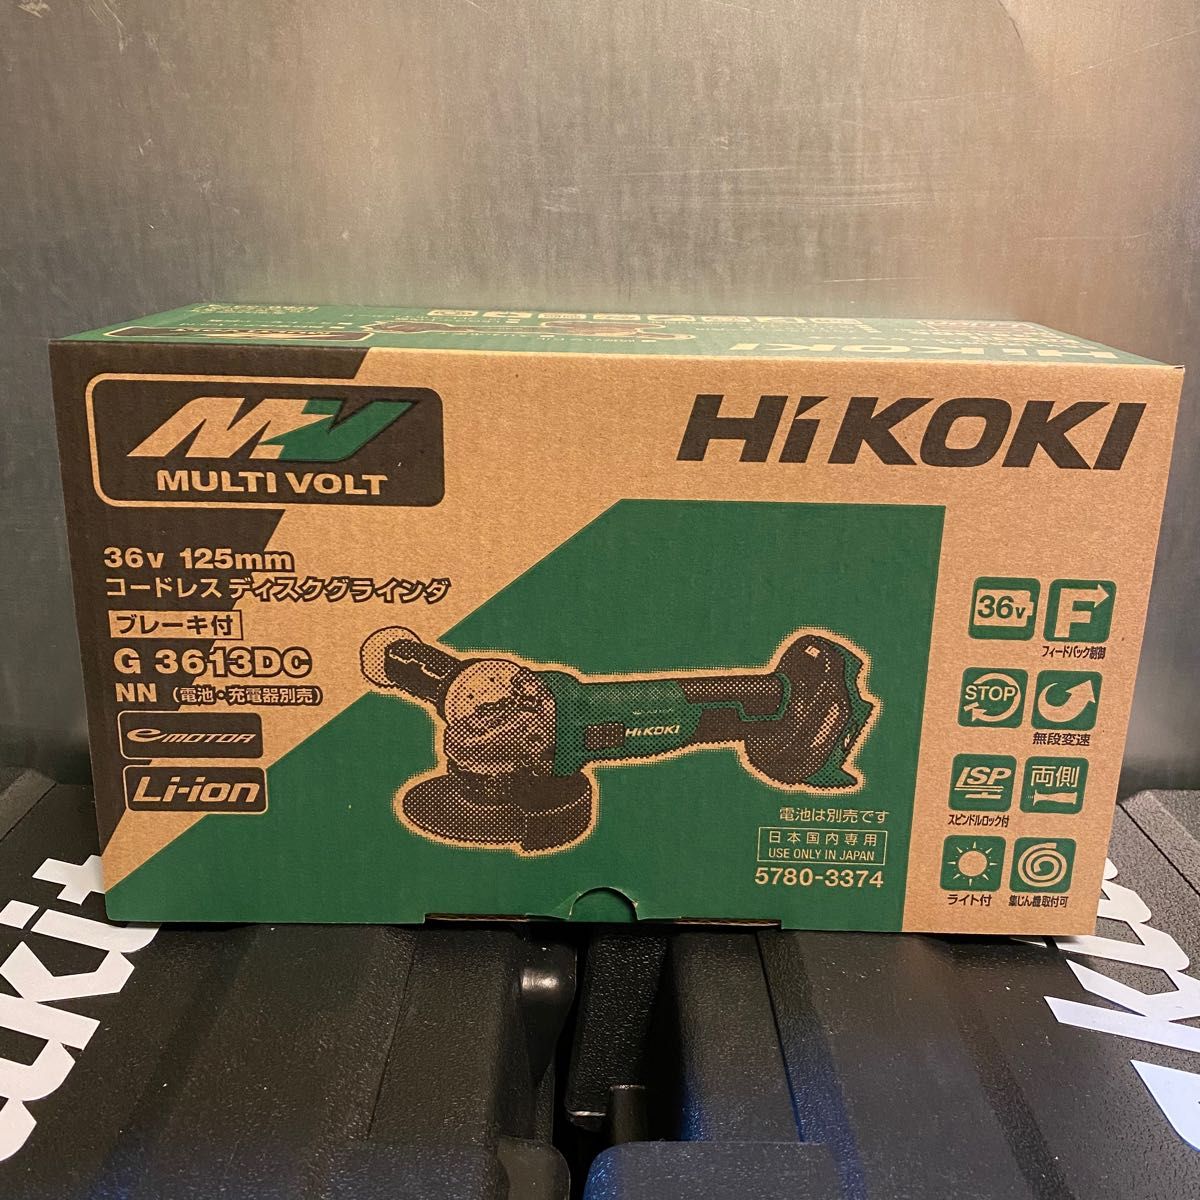 HiKOKI 36Vコードレスディスクグラインダ G3613DC (NN) 本体のみ